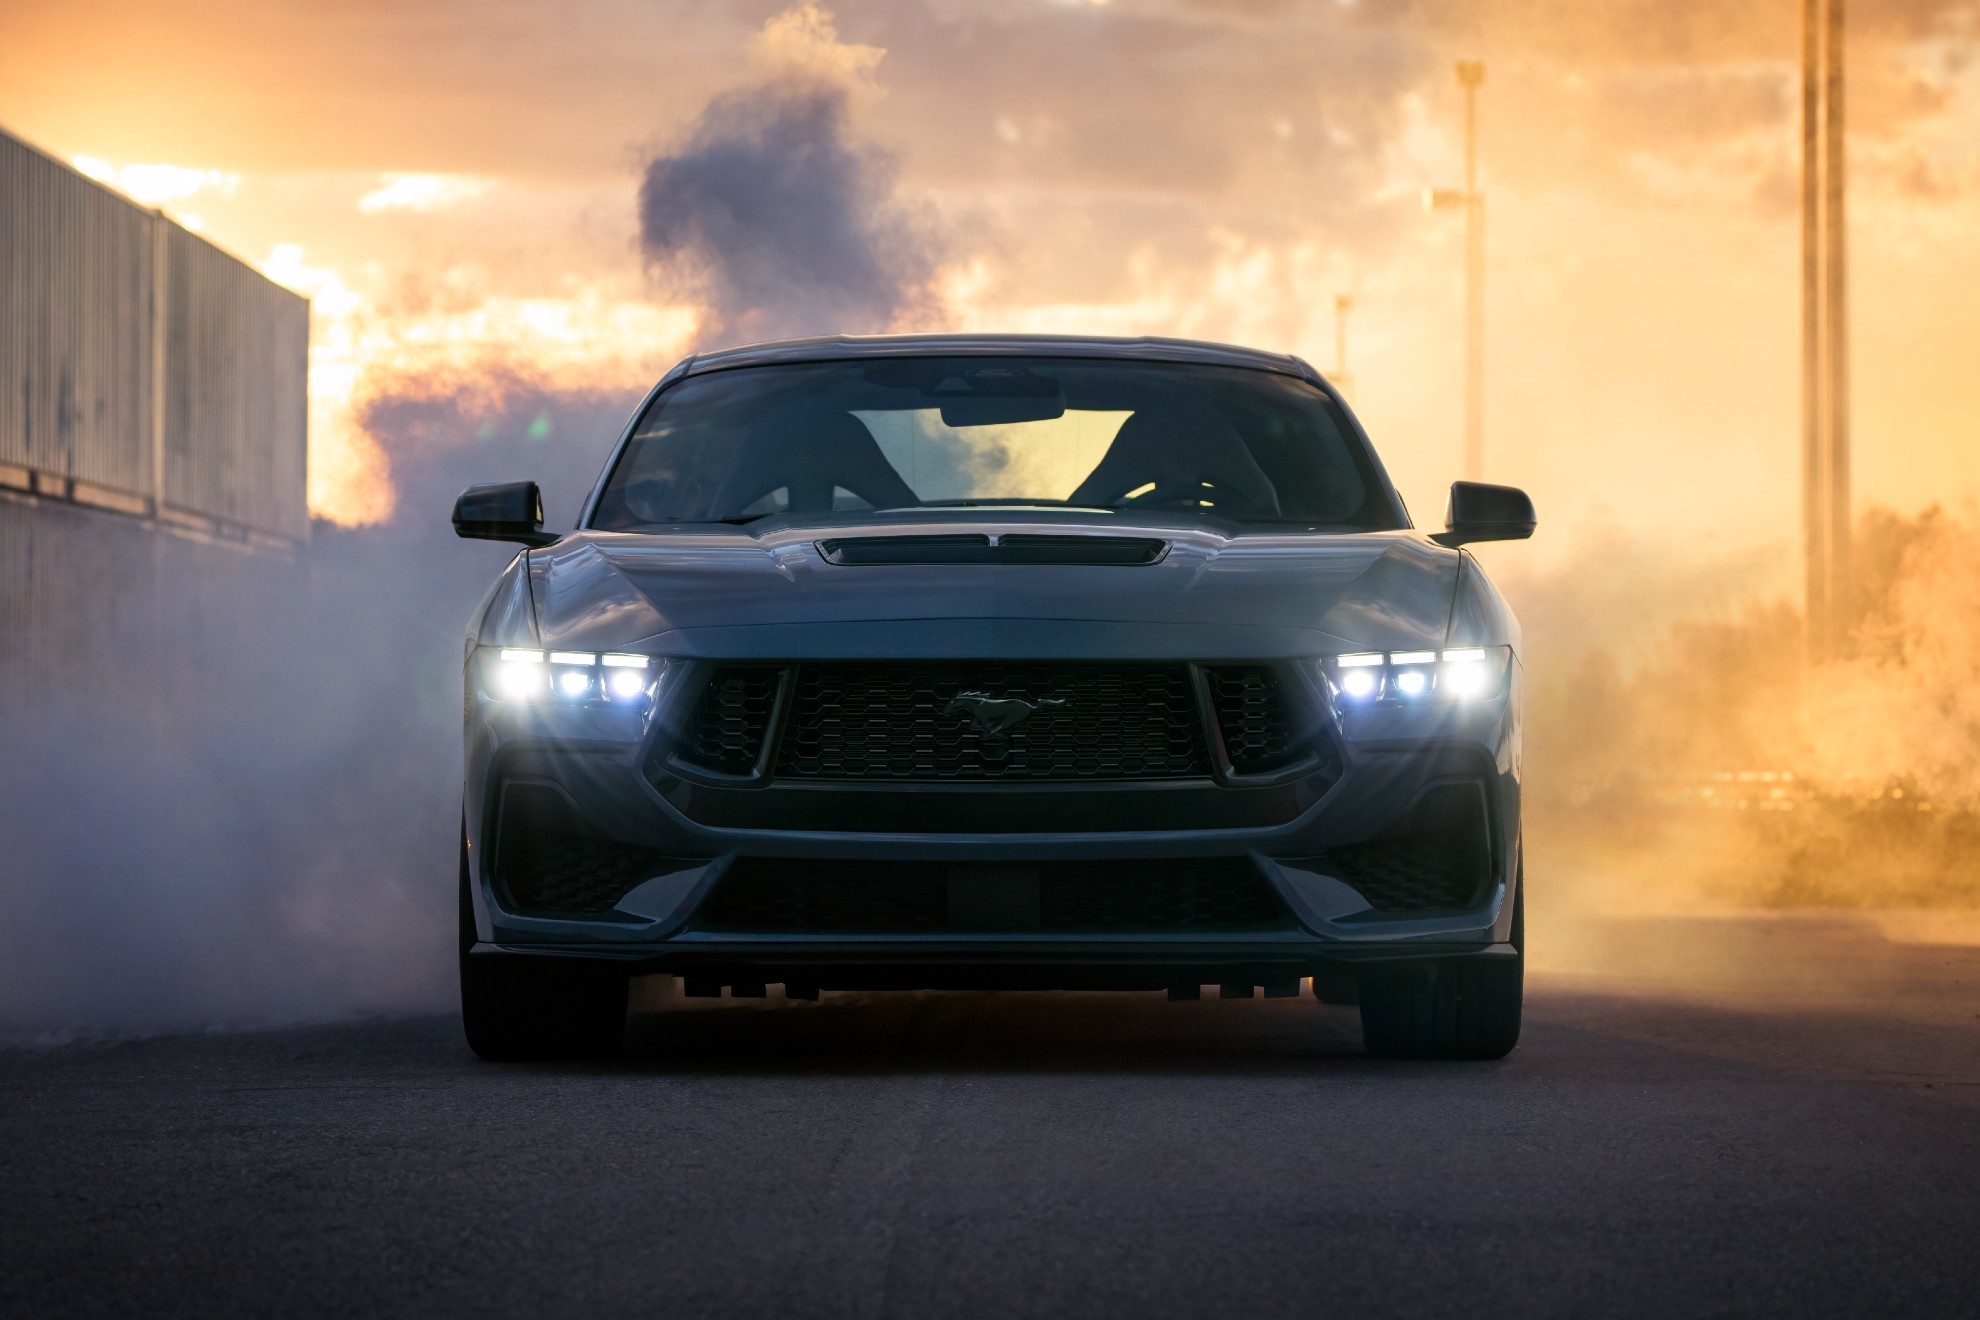 Ford Mustang - septima generacion - Salon de Detroit 2022 - pony car - deportivo